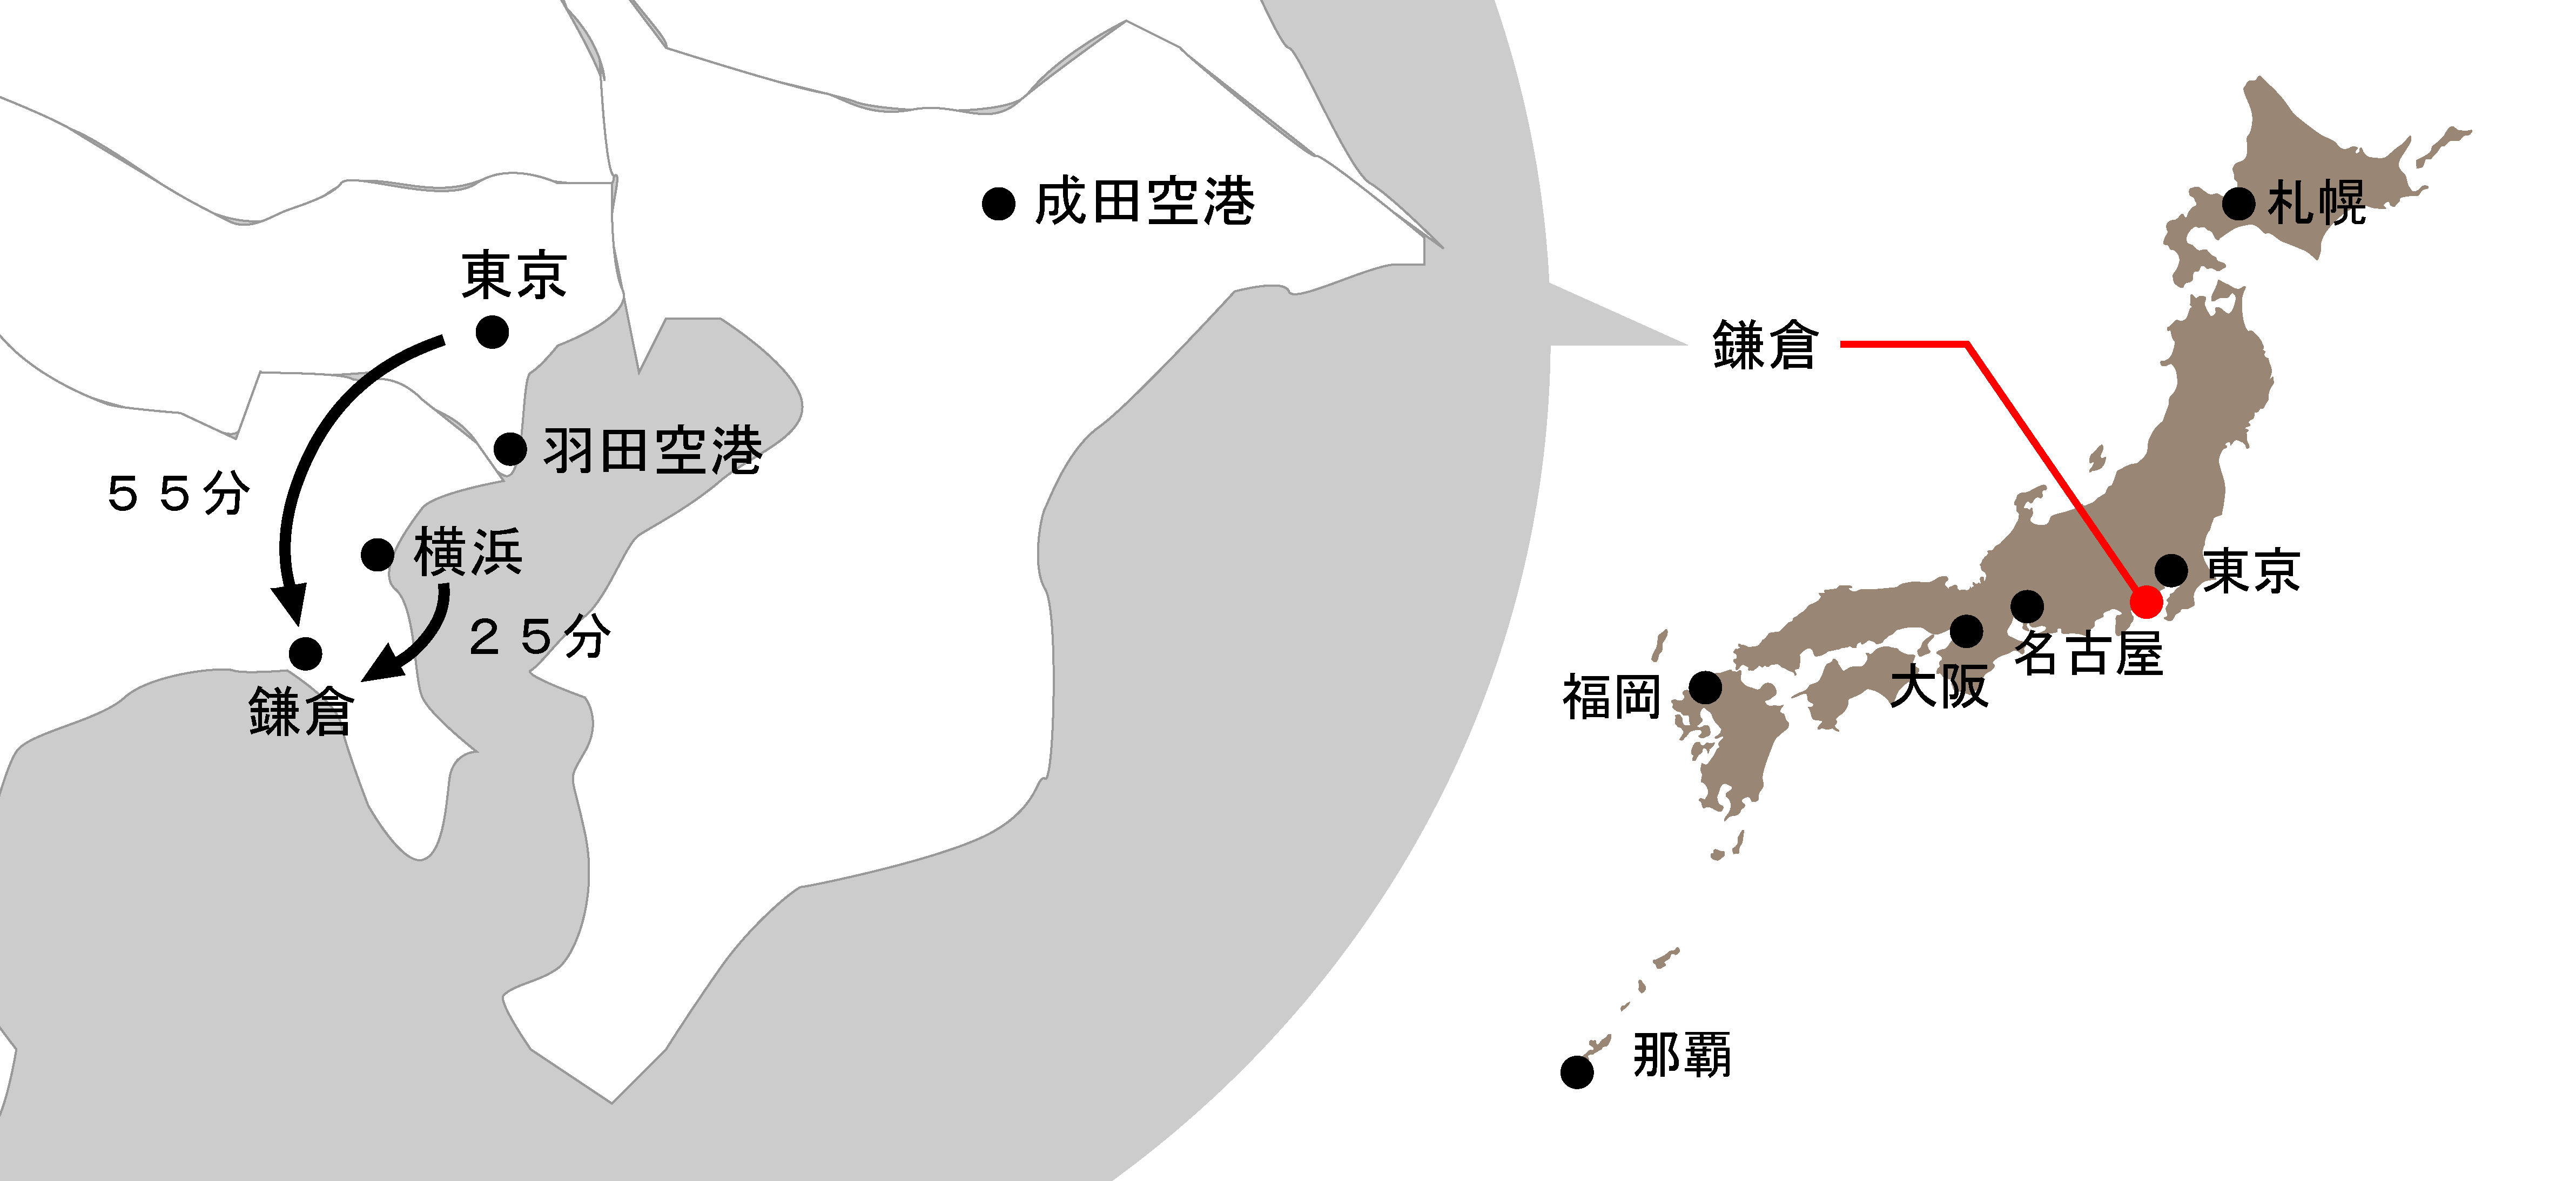 鎌倉の位置関係概略図